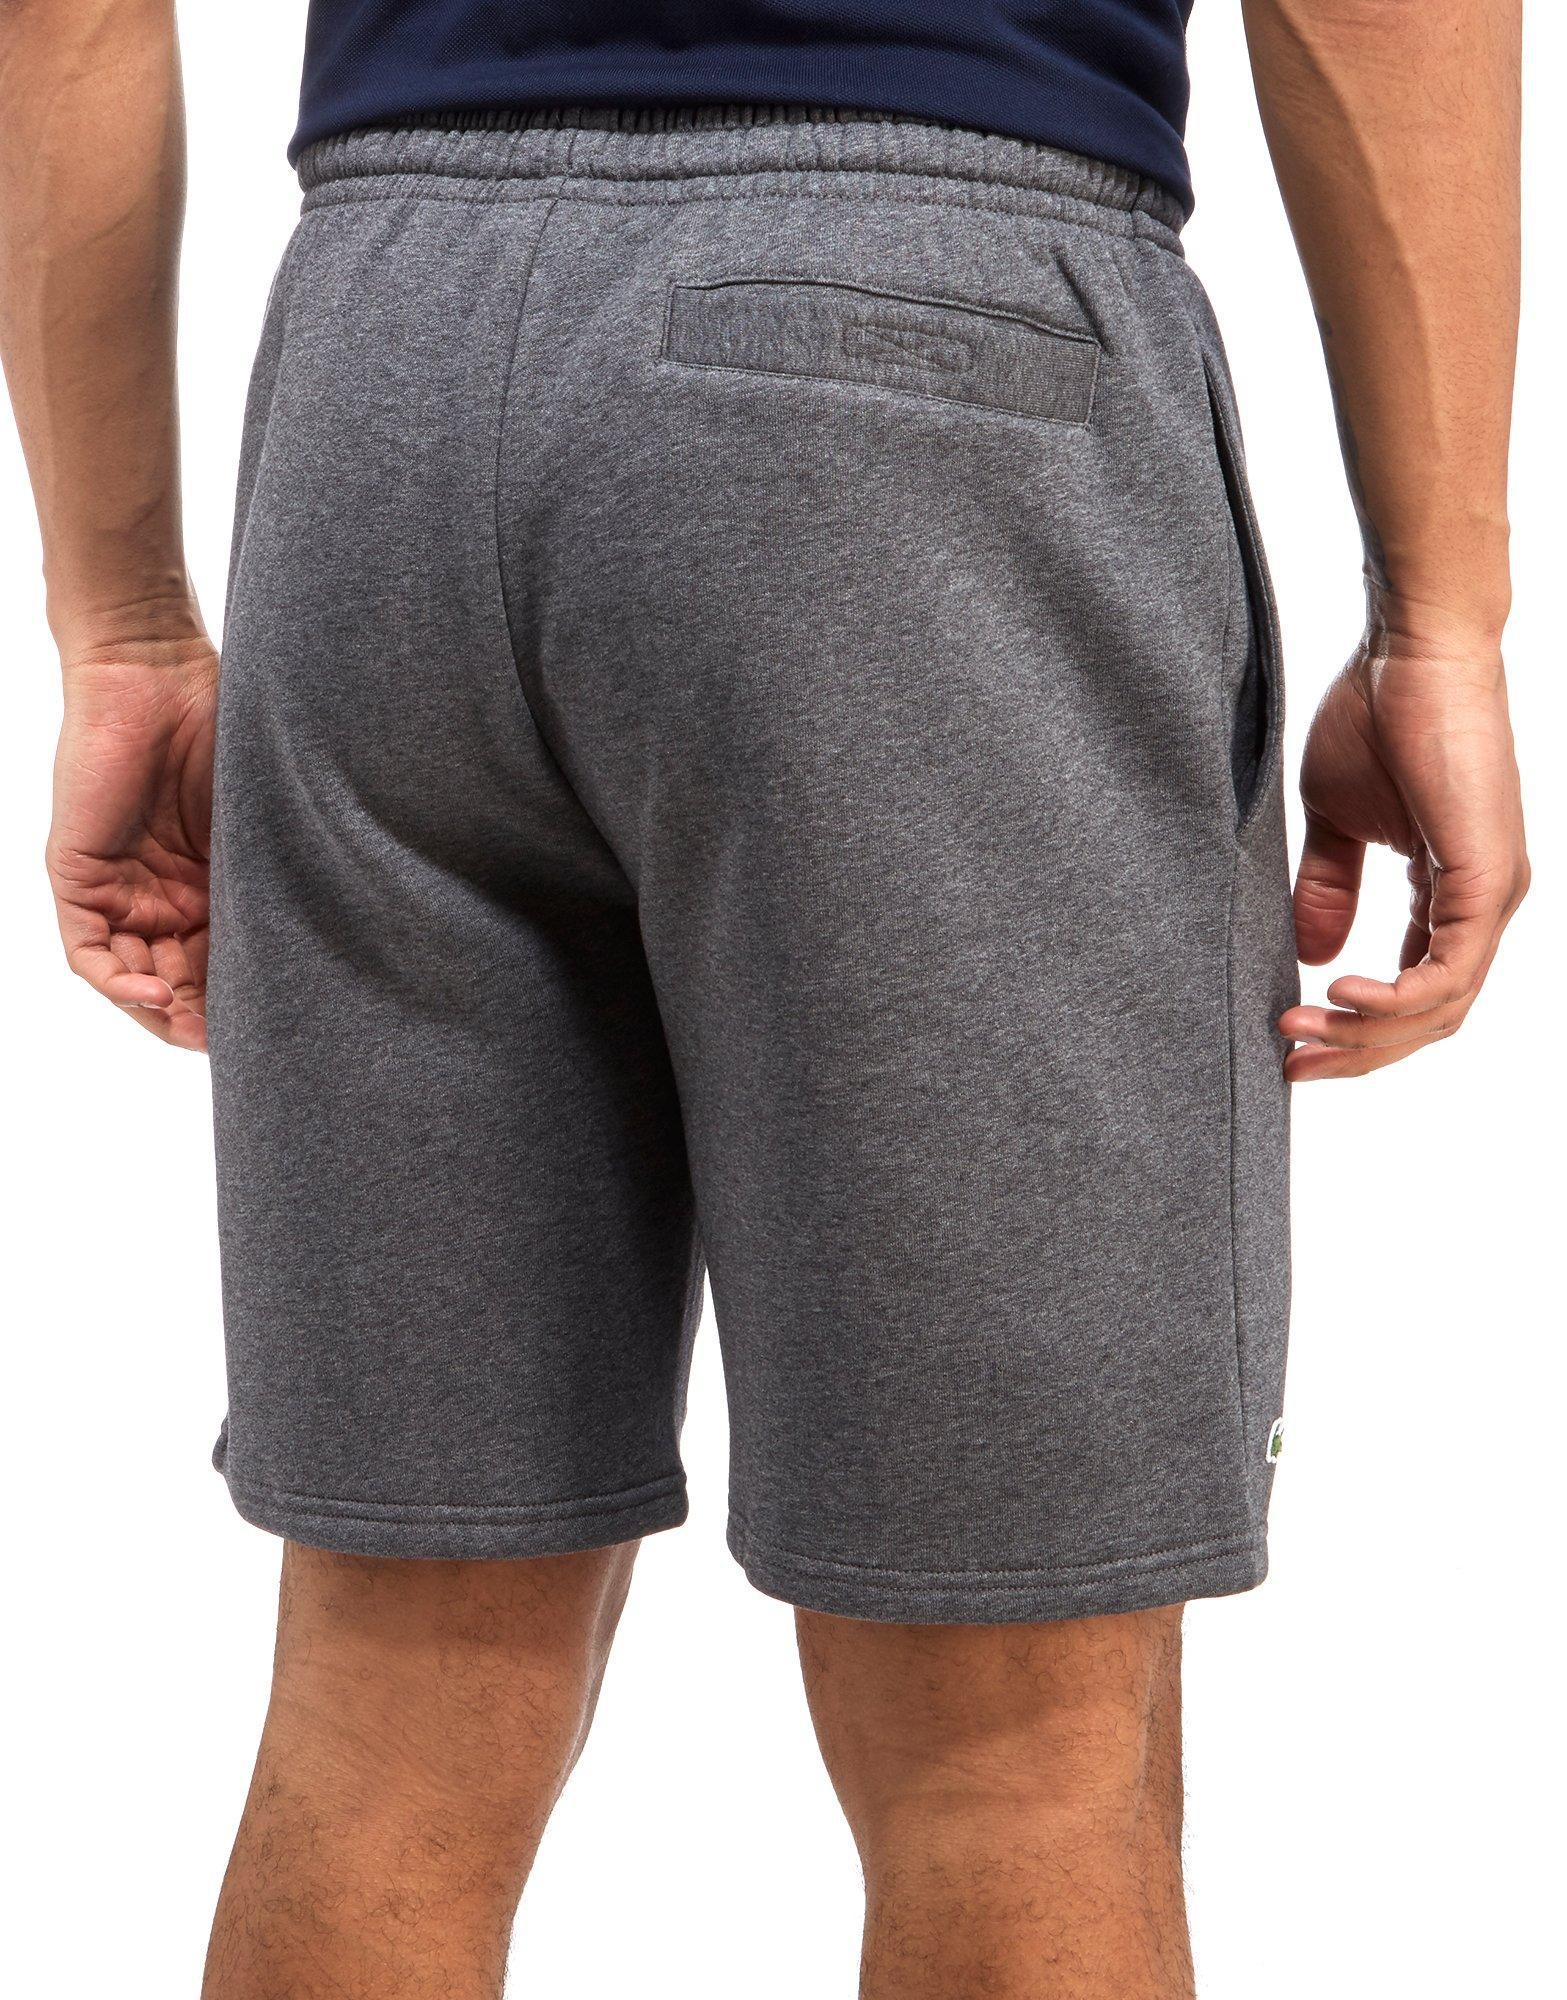 Lacoste Premium Fleece Shorts in Gray for Men - Lyst